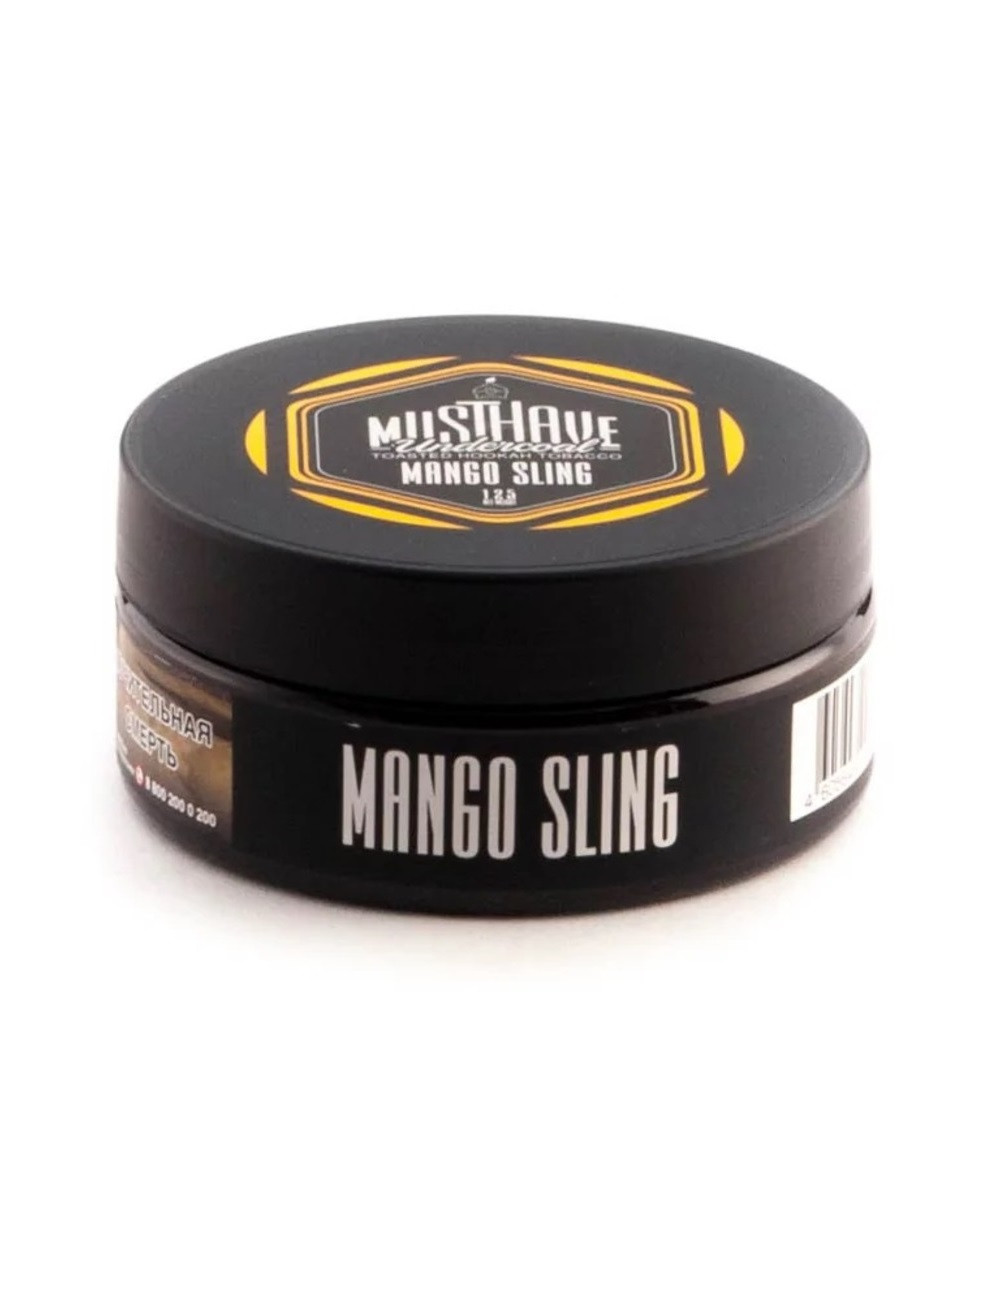 Mango sling